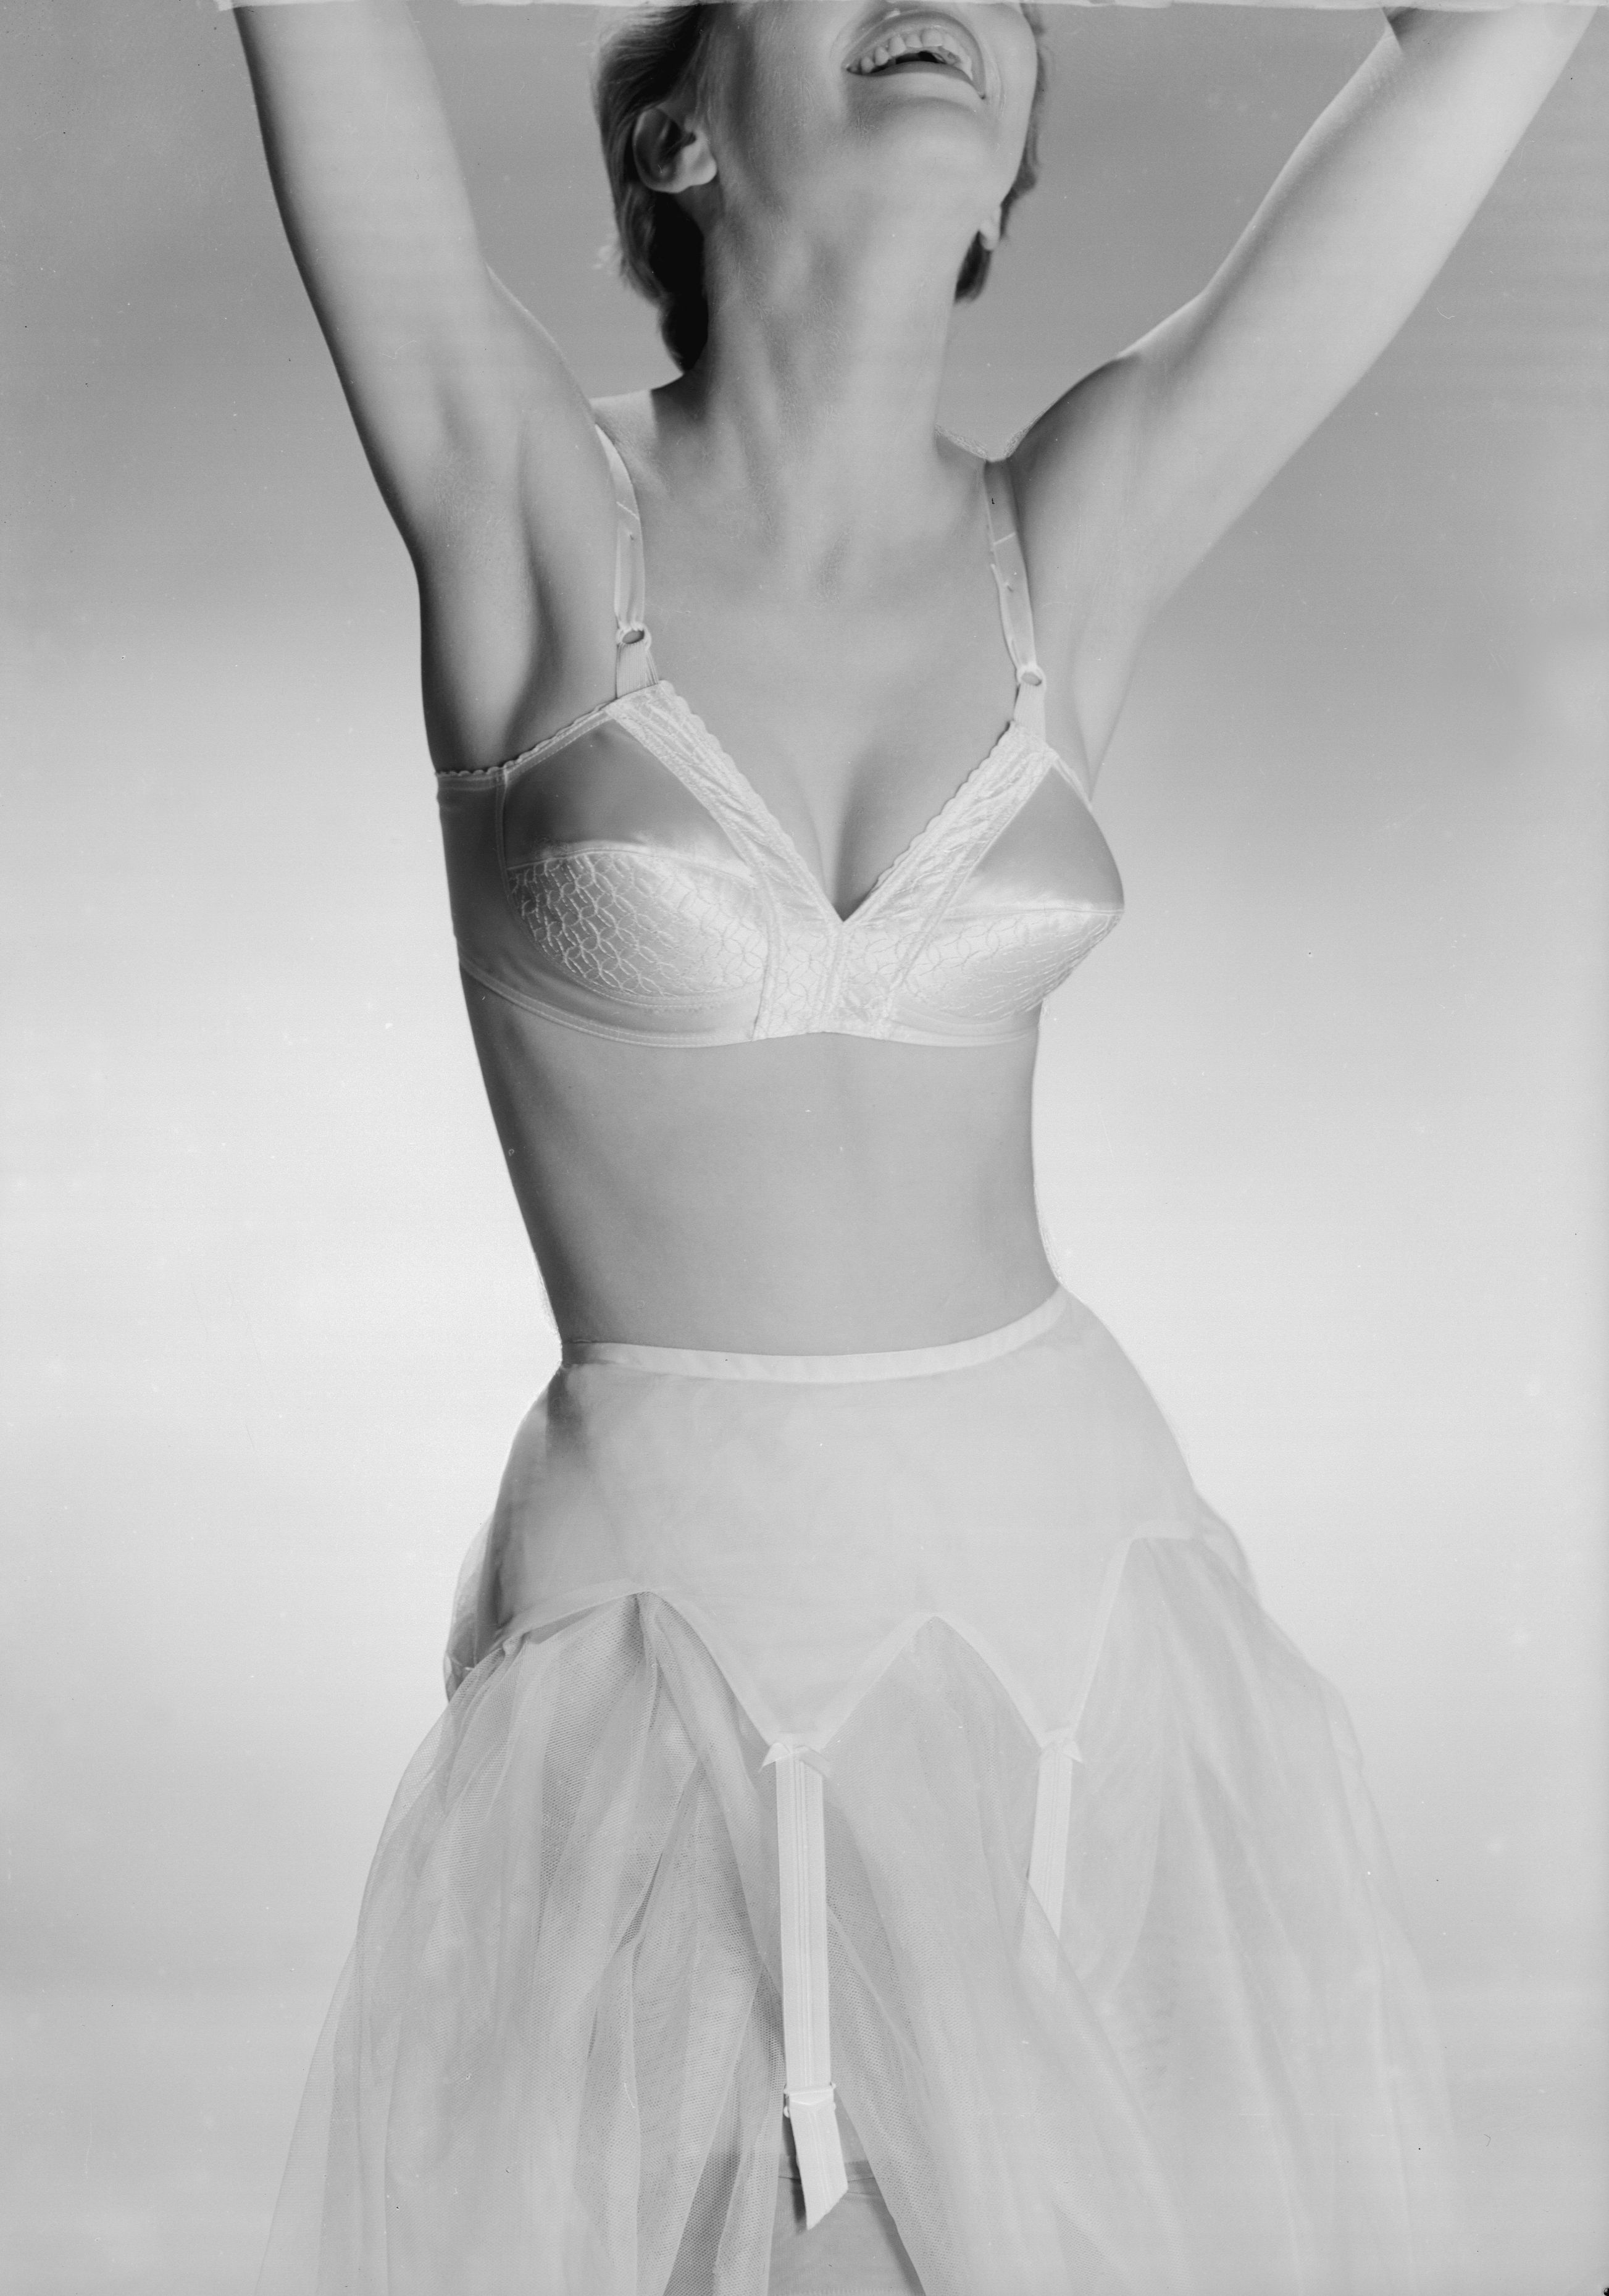 1947 Formfit Bra Girdle Women Fashion Clothing Underwear Vintage